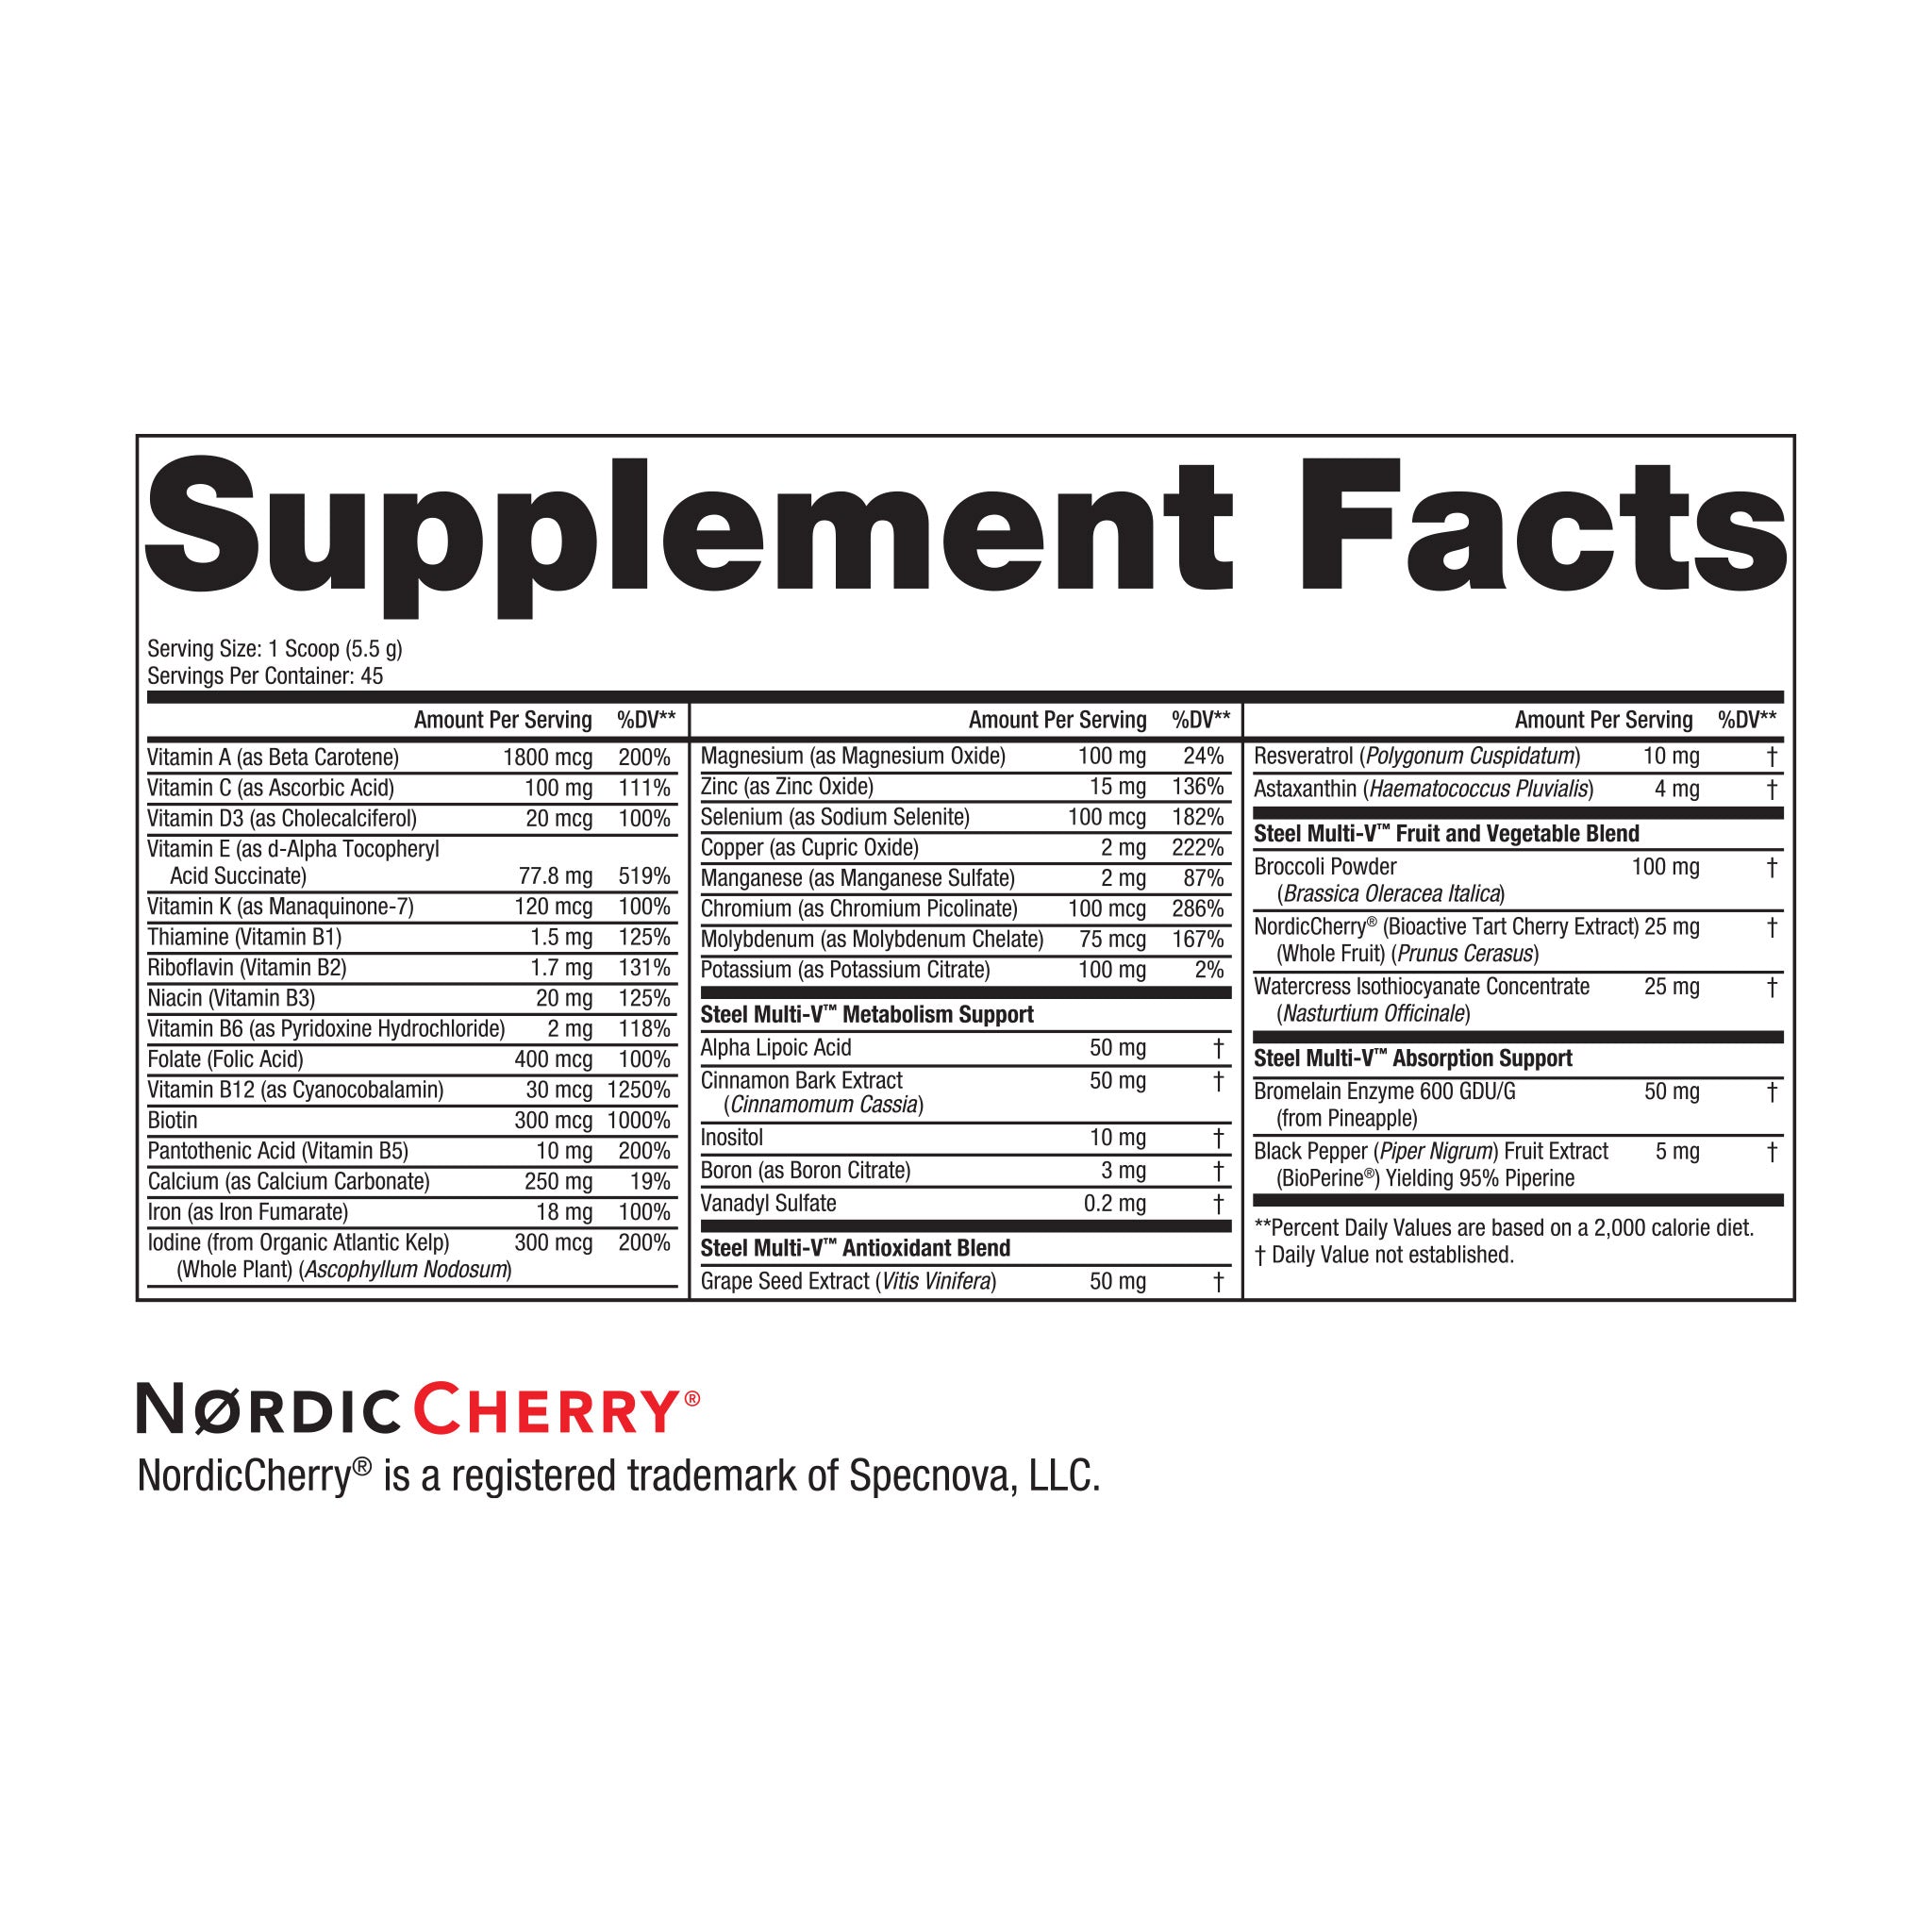 steel multi-v supplement facts